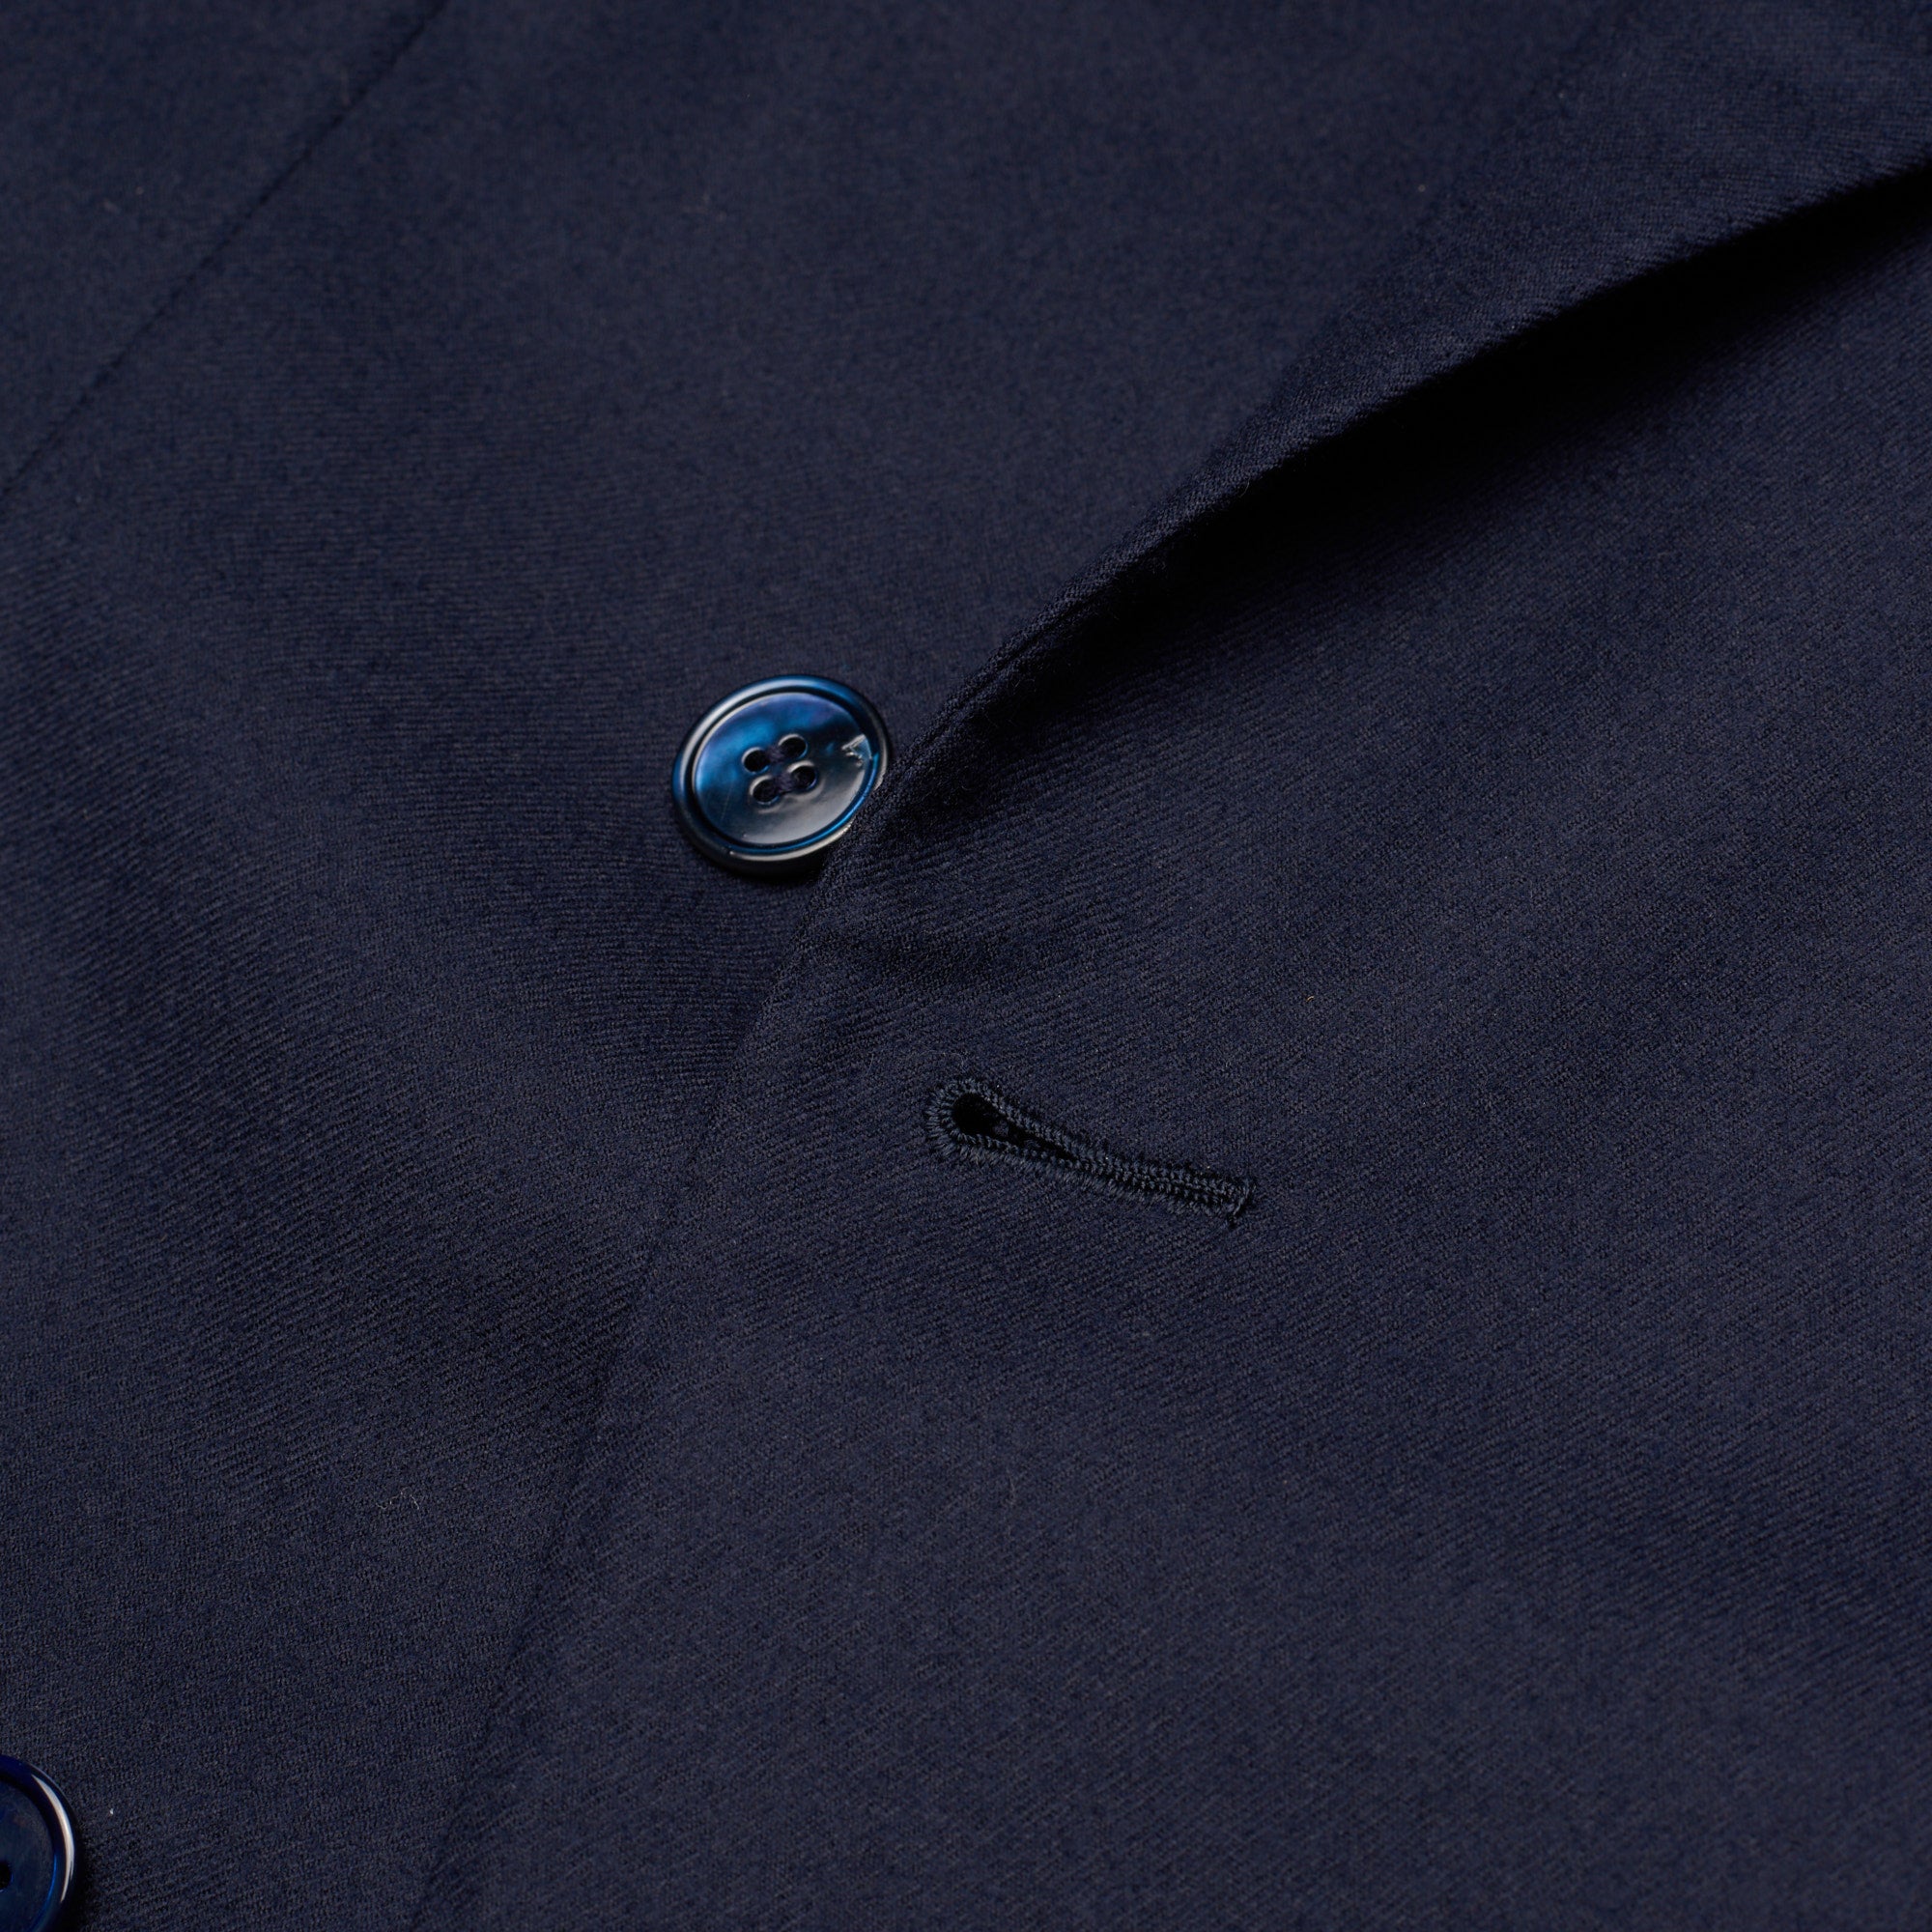 FALLAN & HARVEY LTD. Savile Row Bespoke Blazer Blue Wool DB Jacket US 42 FALLAN & HARVEY LTD.